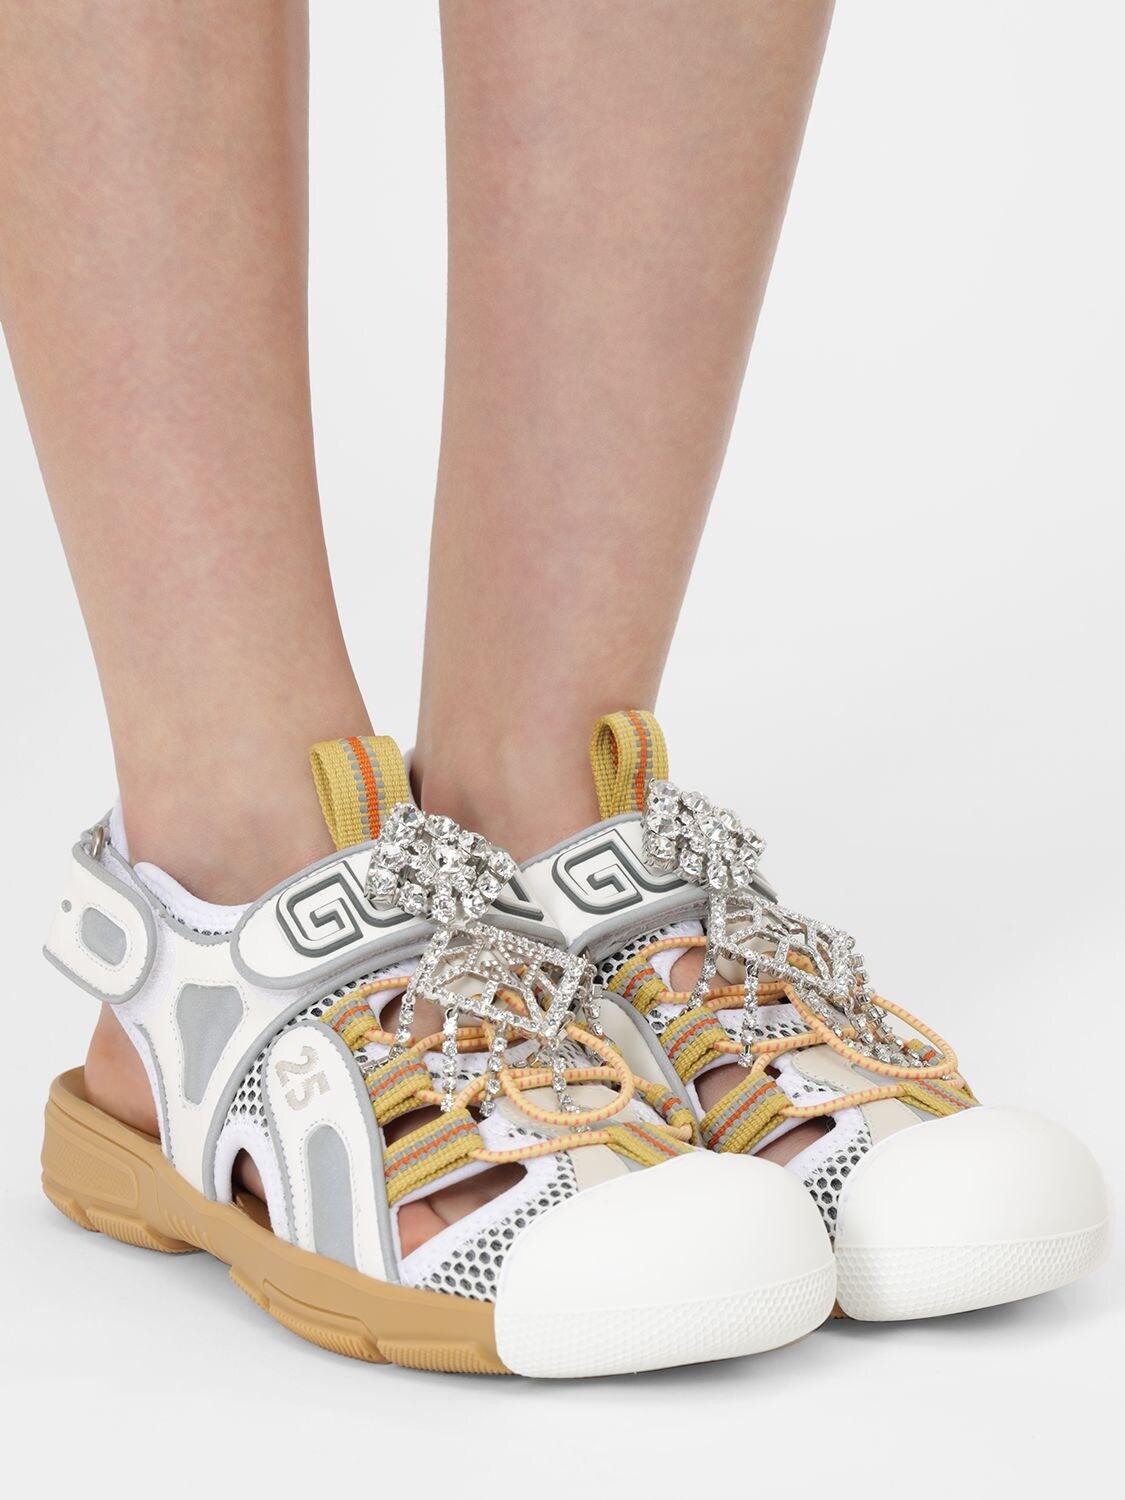 nerveus worden Weggegooid Sophie Gucci Tinsel Sandal Sneakers in White | Lyst